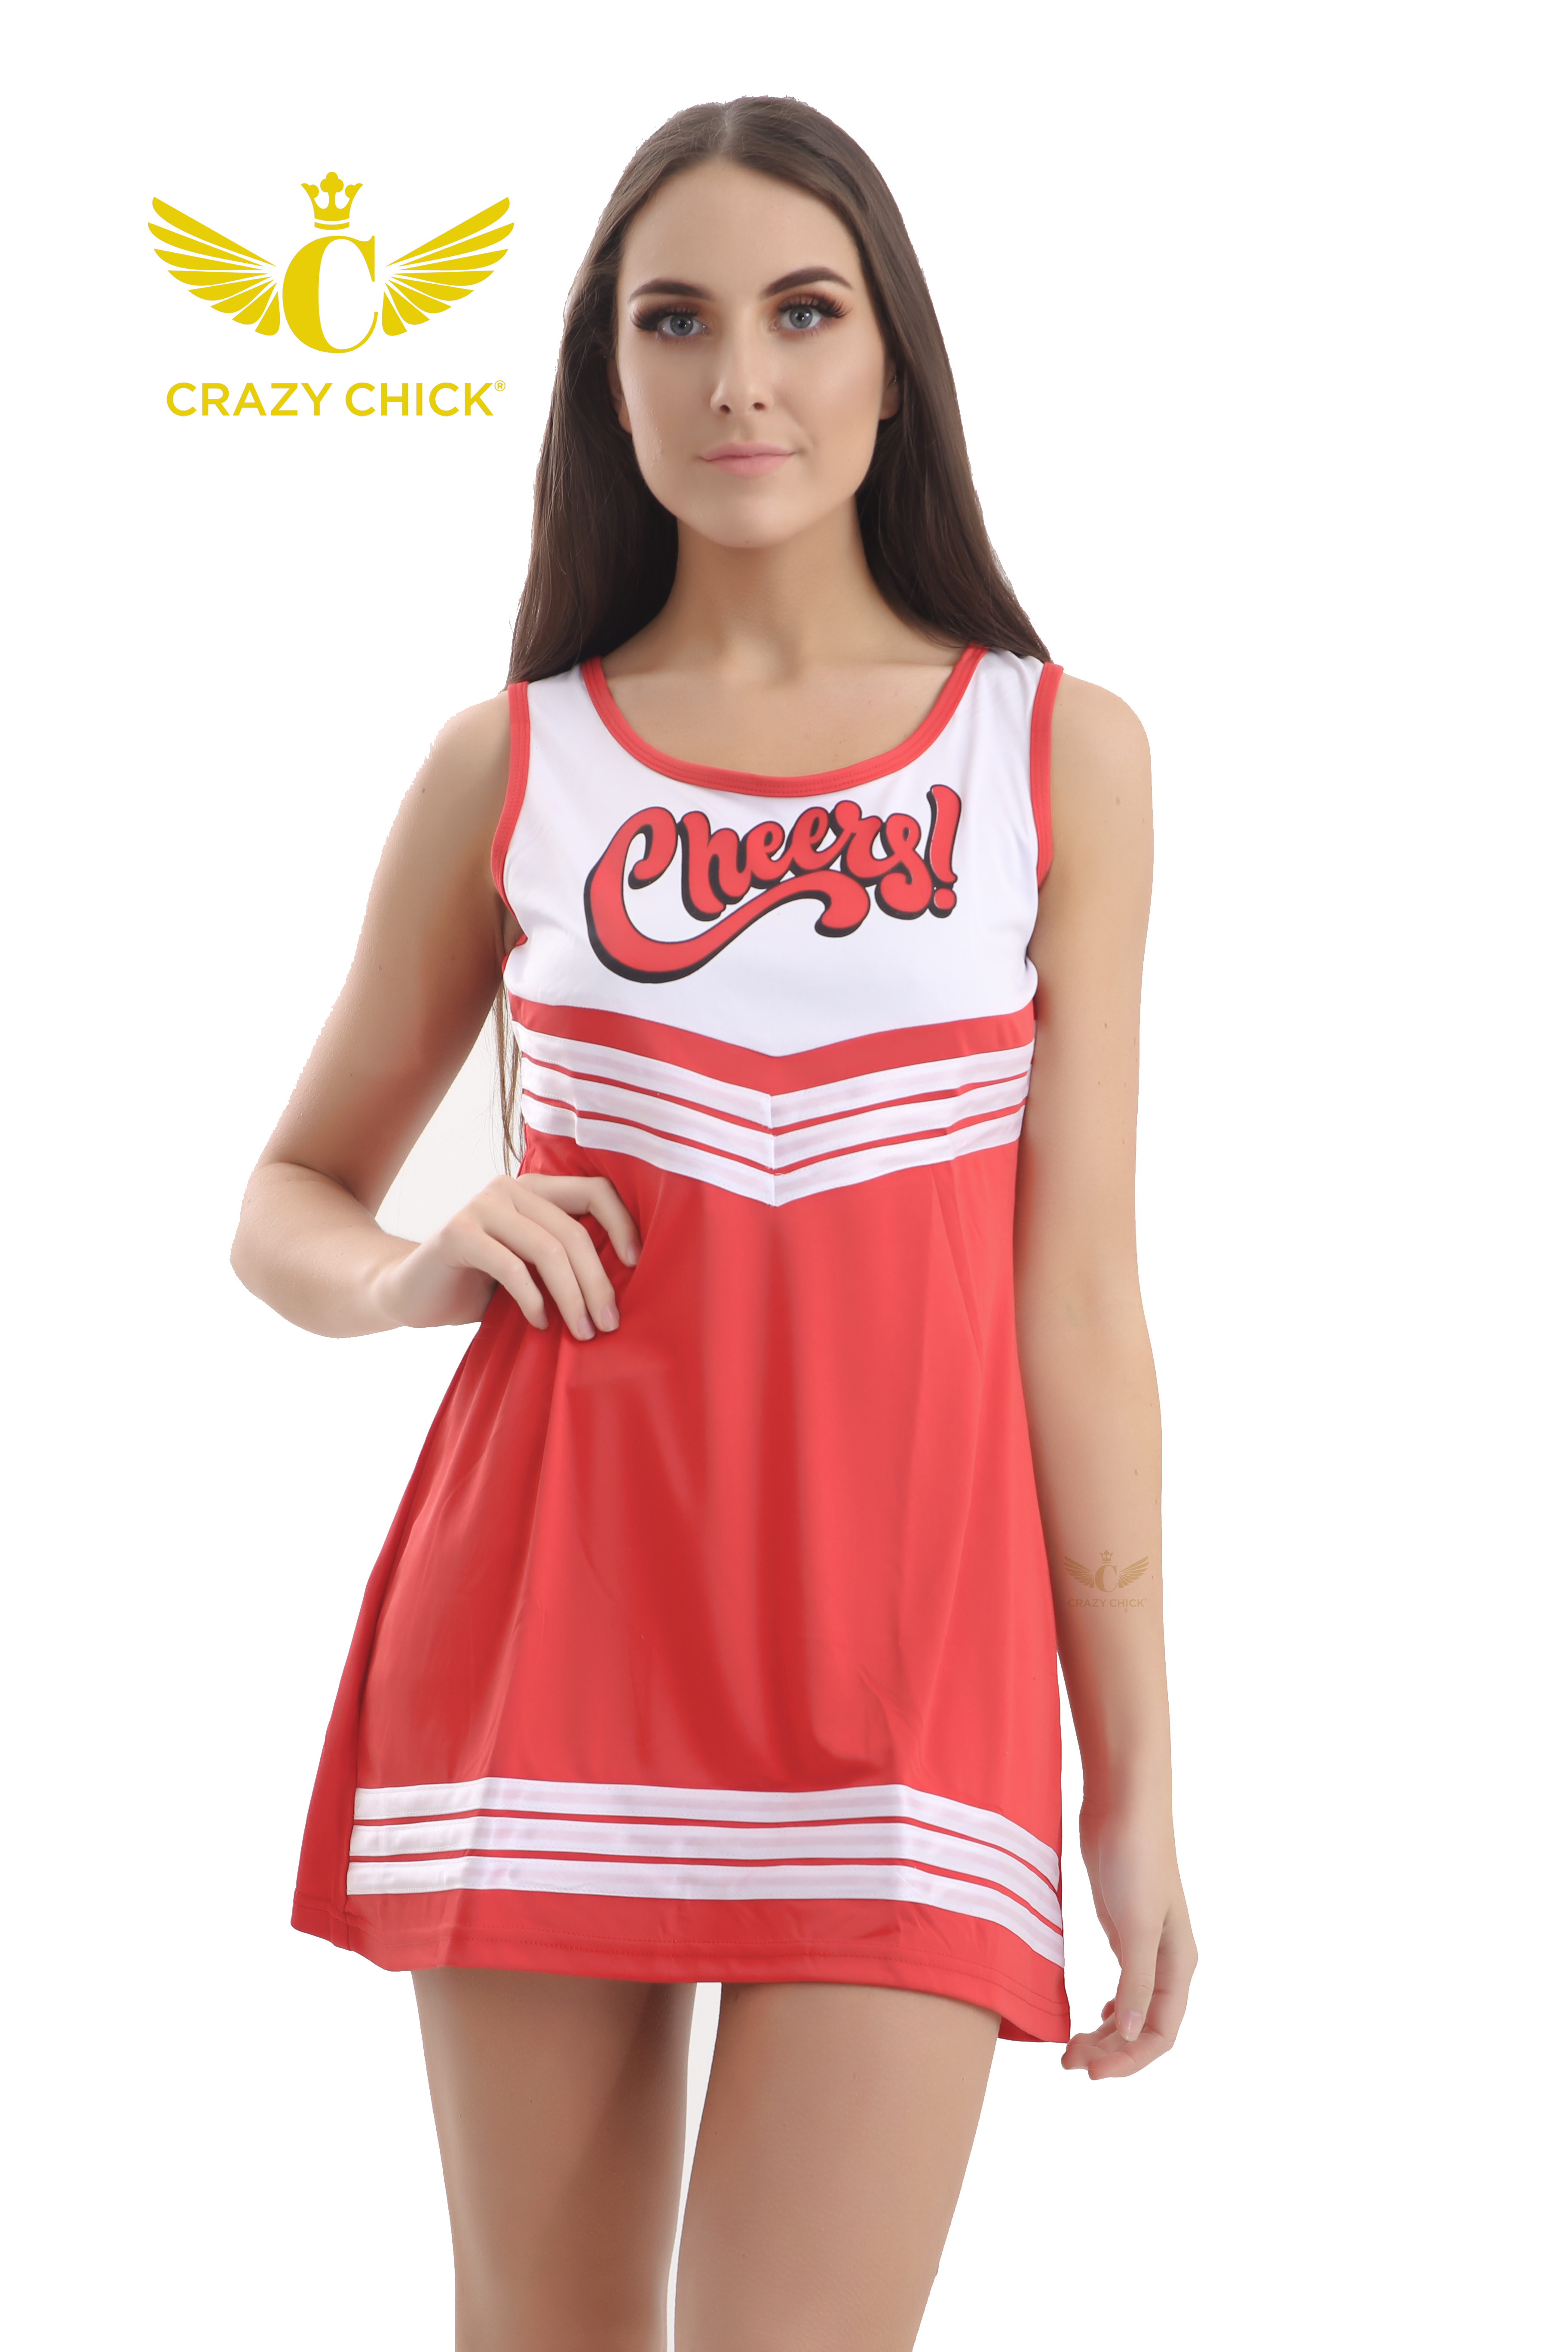 Crazy Chick Adult Cheerleader Costume